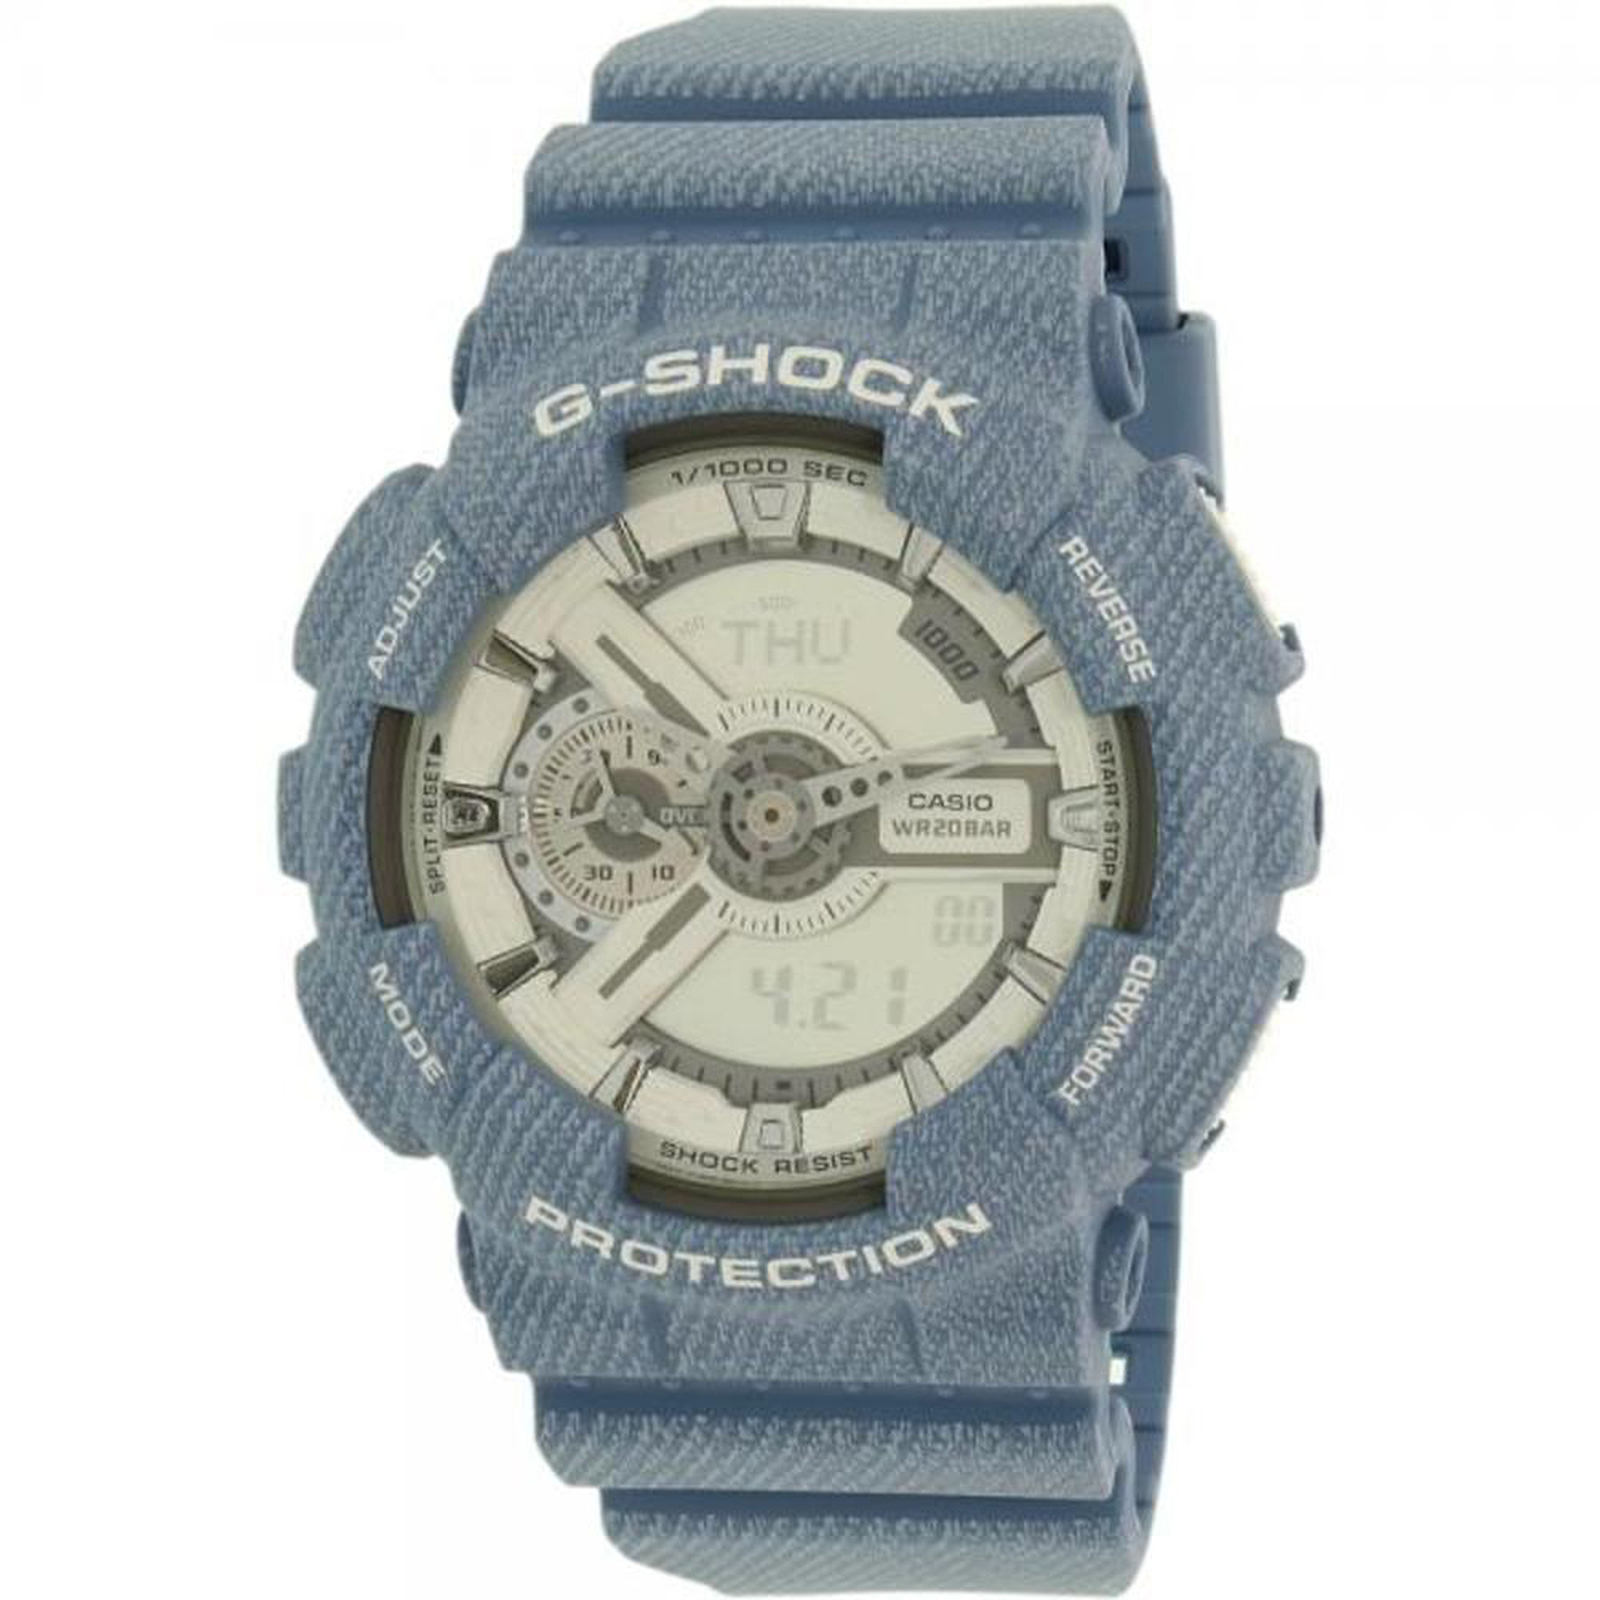 Casio Men's G-Shock Resin Quartz Watch - Blue